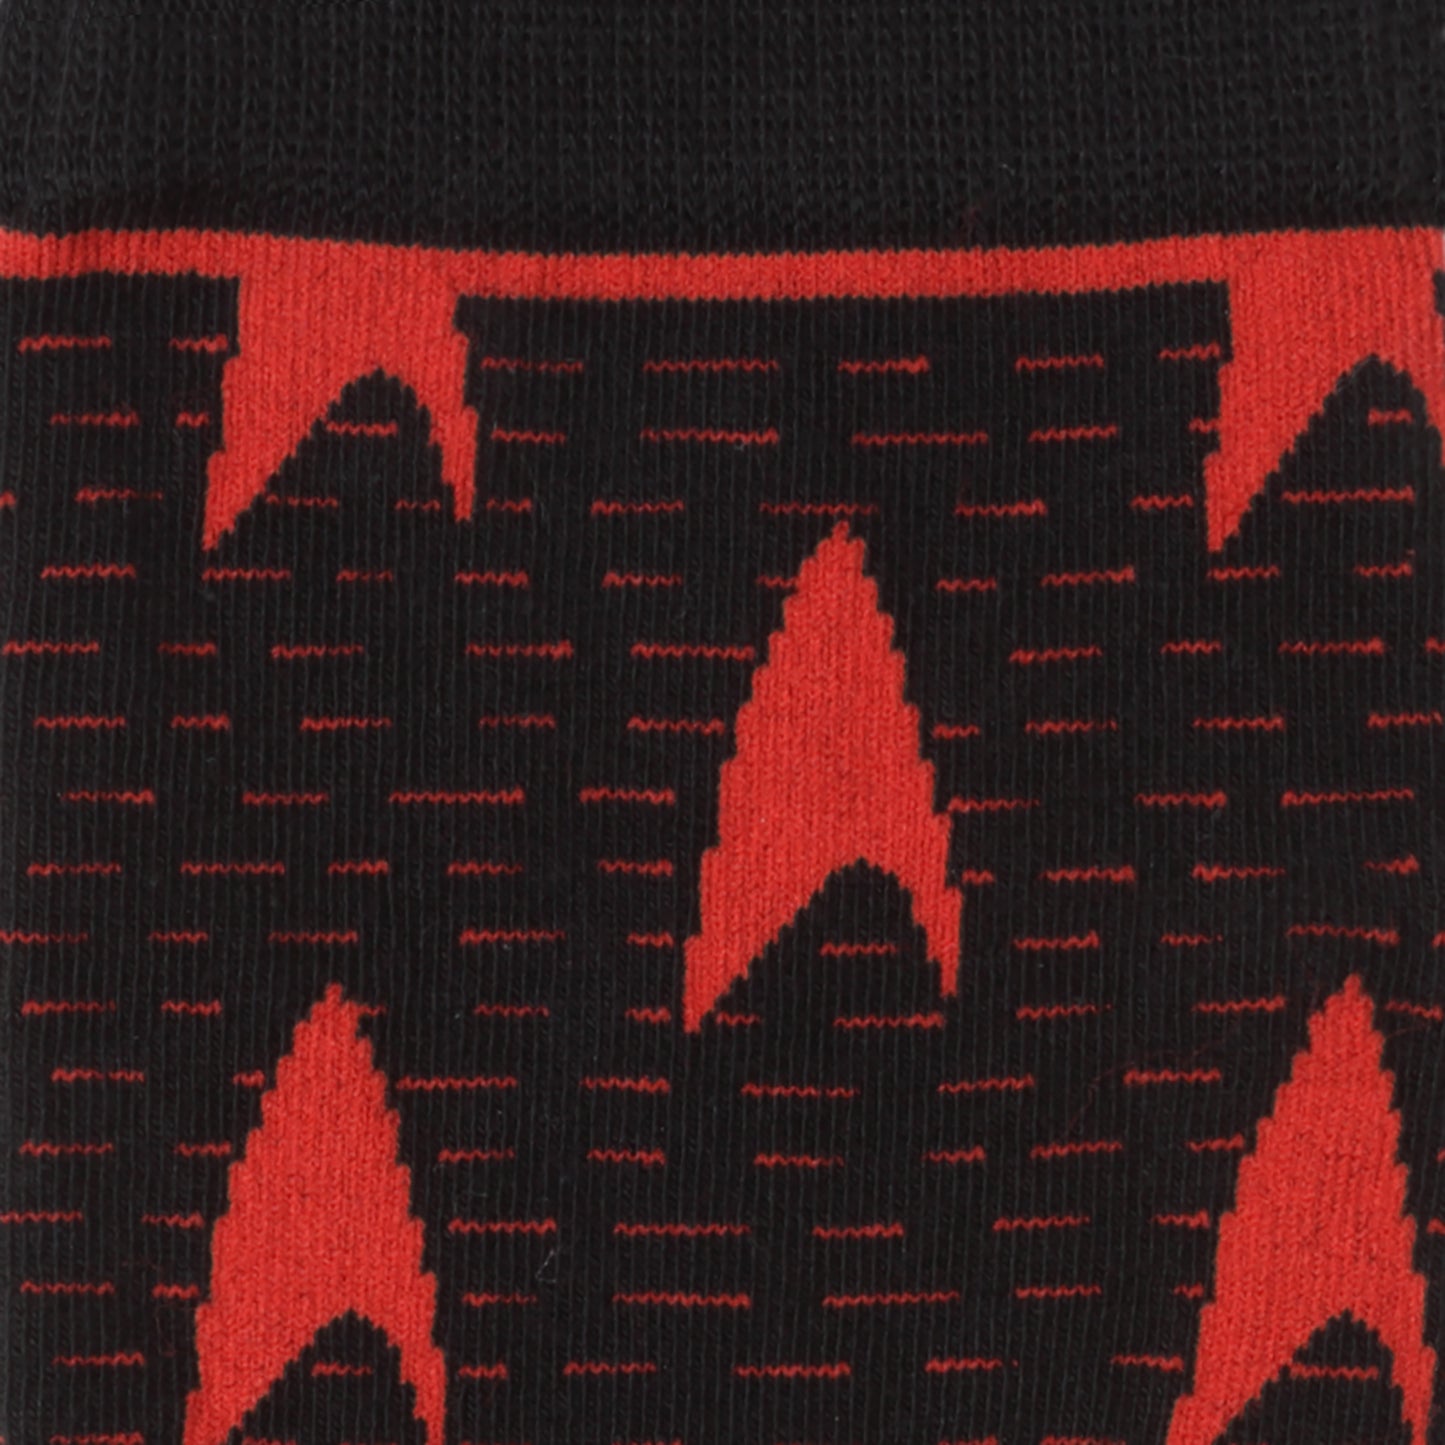 Star Trek Set de regalo de 3 pares de calcetines